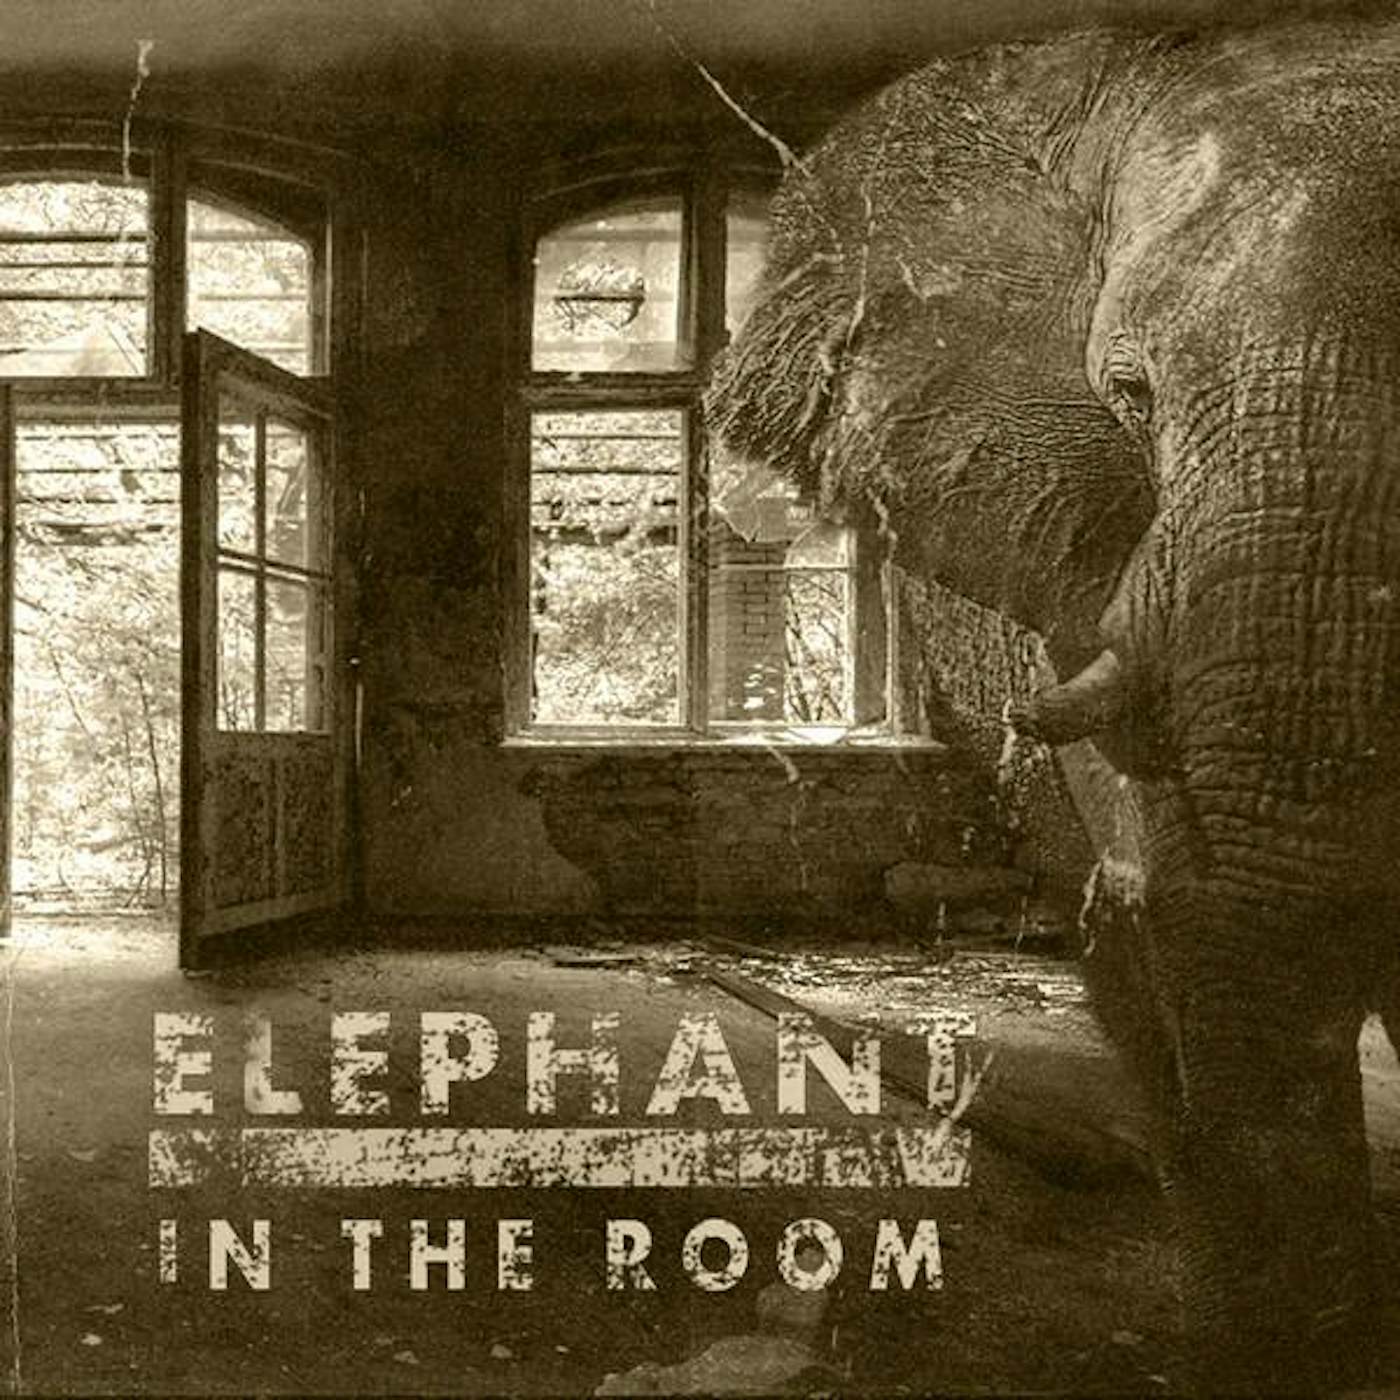 Blackballed Elephant in the Room Vinyl Record